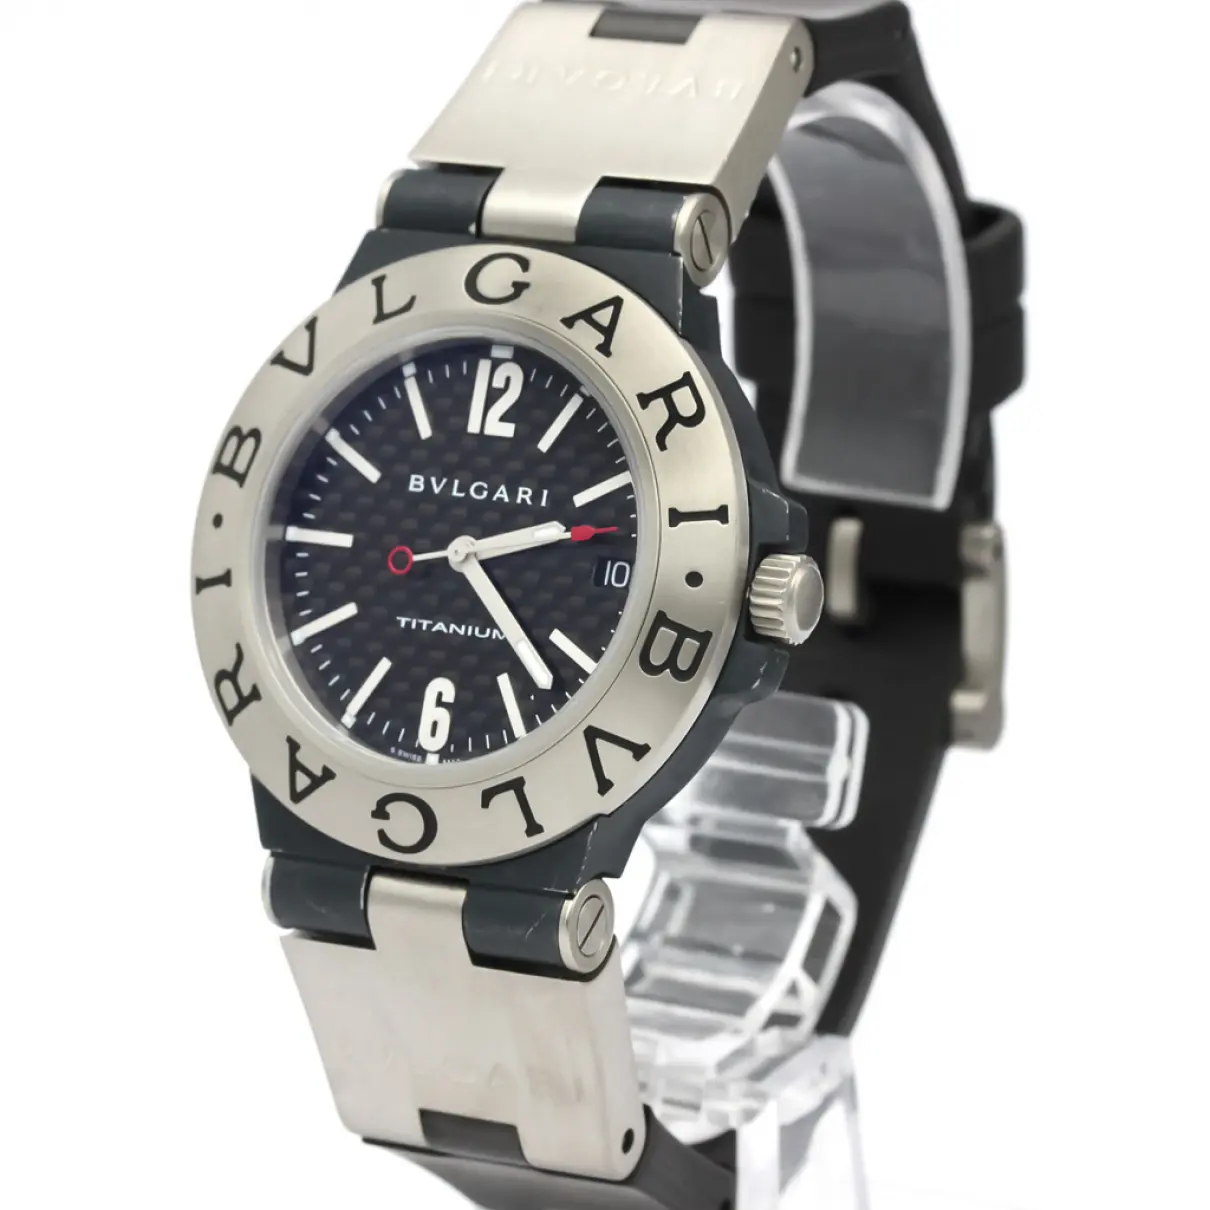 Buy Bvlgari Diagono watch online